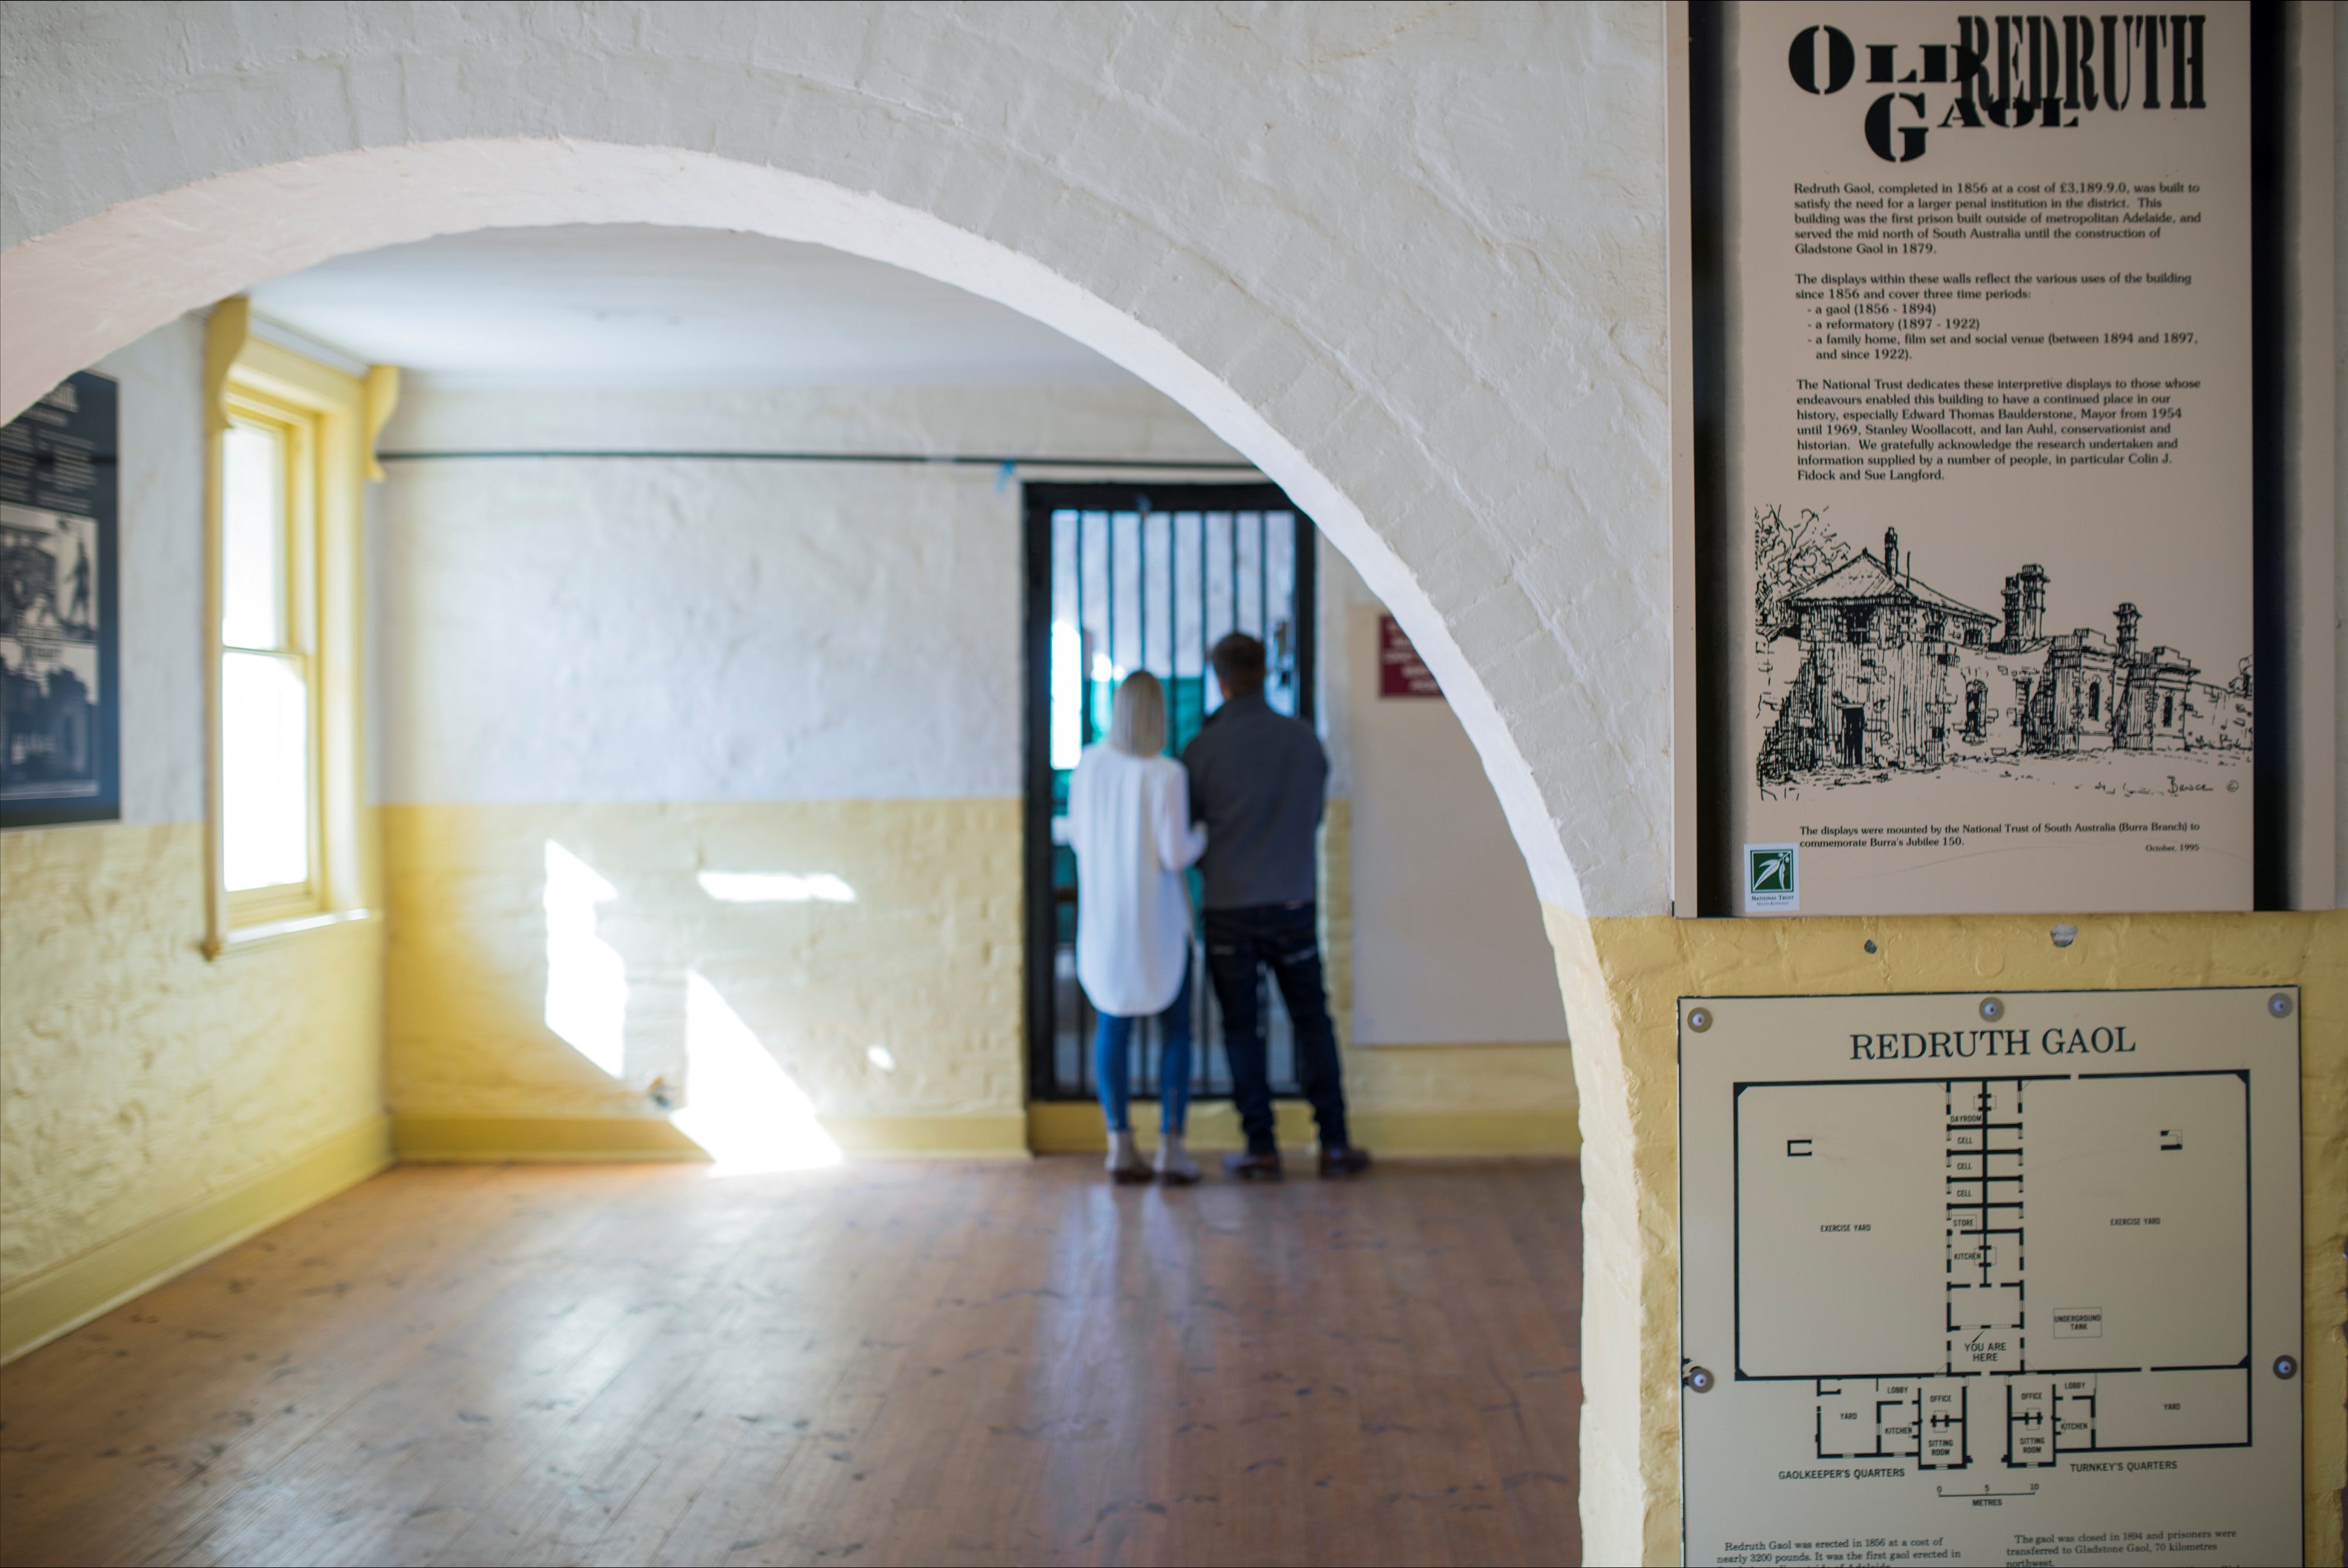 Redruth Gaol - Accommodation Resorts